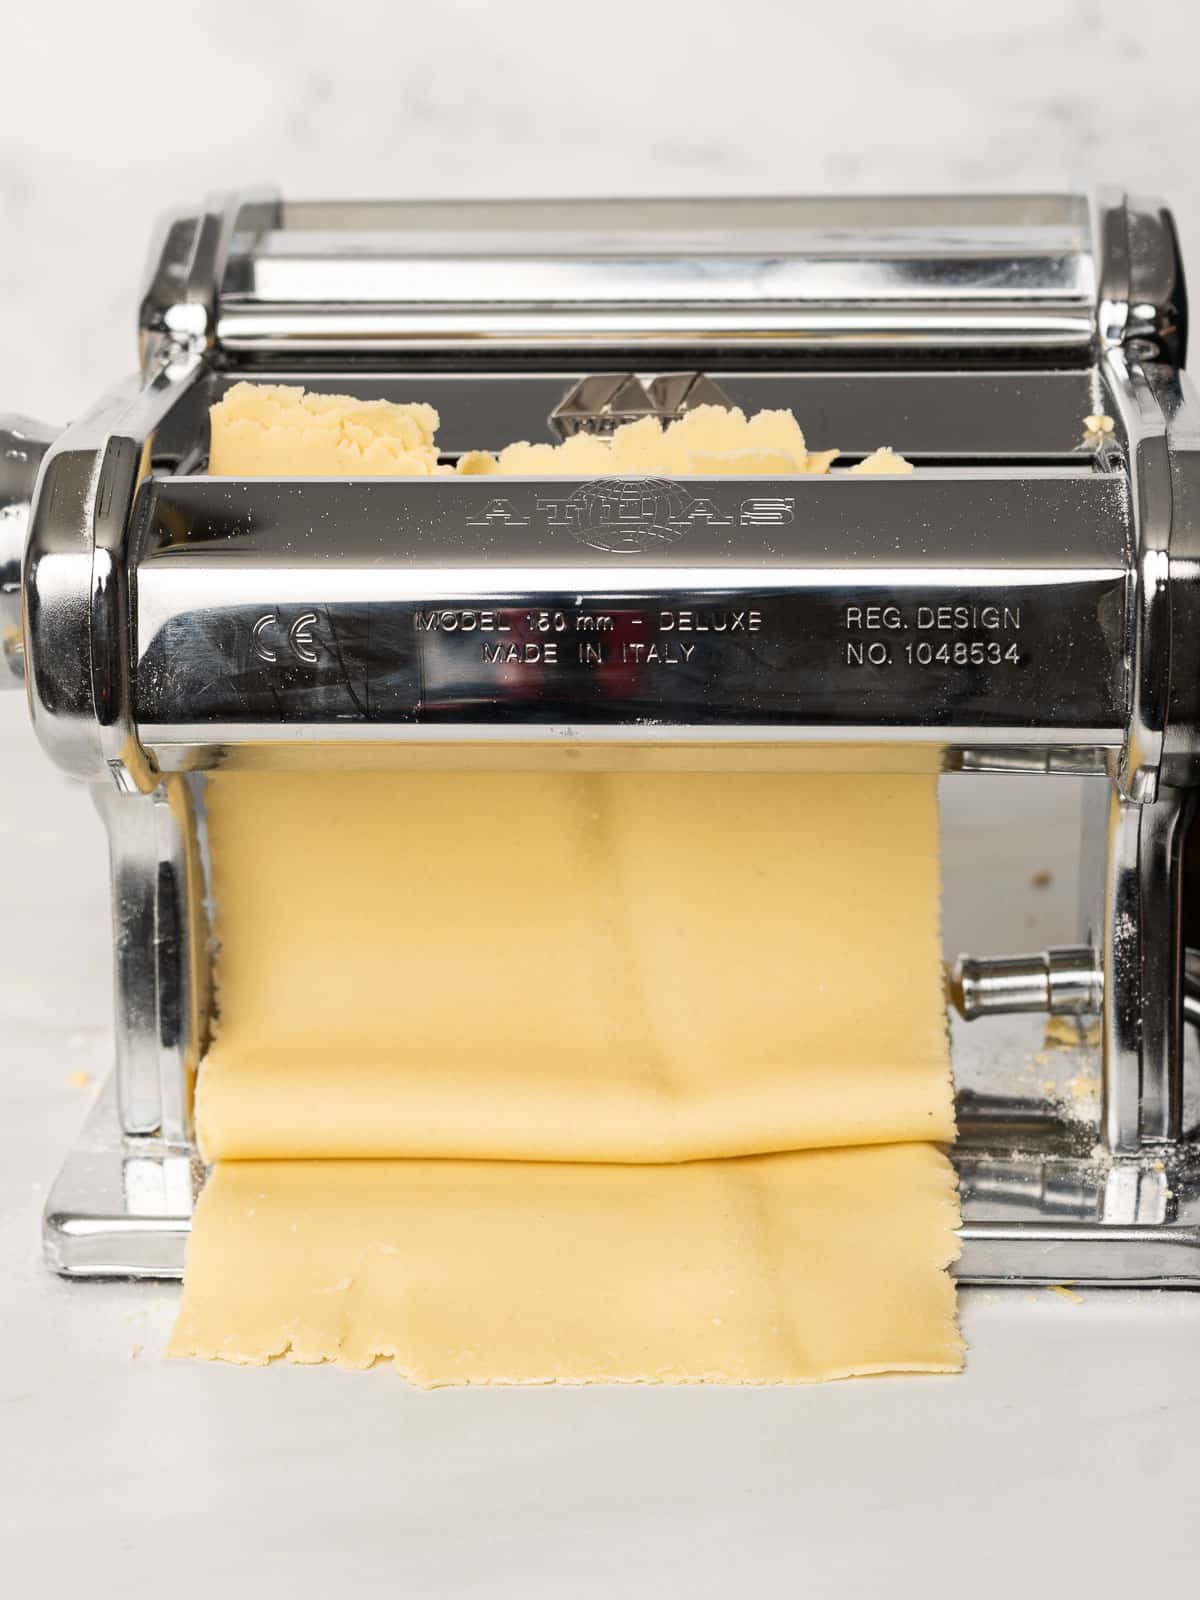 Pasta dough in the pasta maker machine.